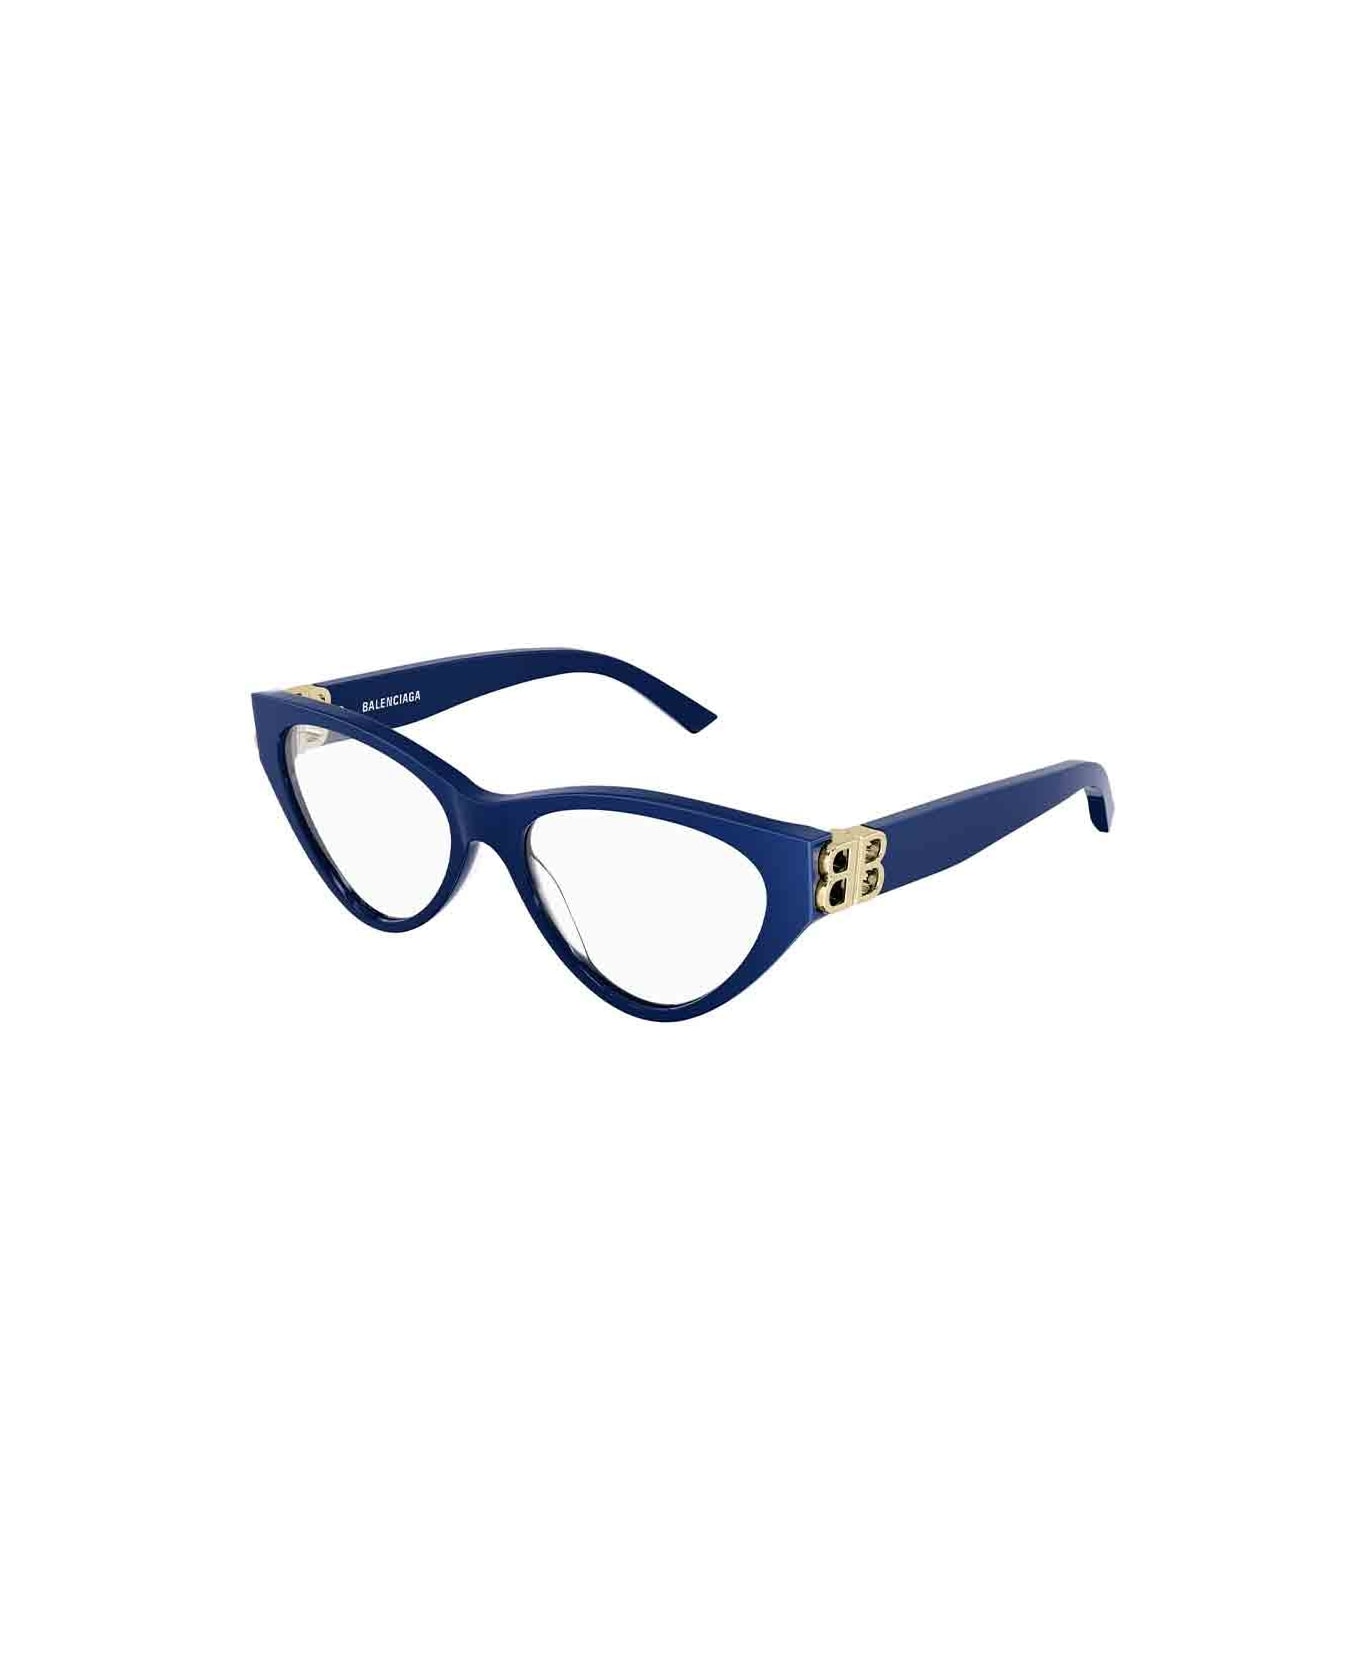 Balenciaga Eyewear Bb0172o Glasses - 004 BLUE BLUE TRANSPARENT